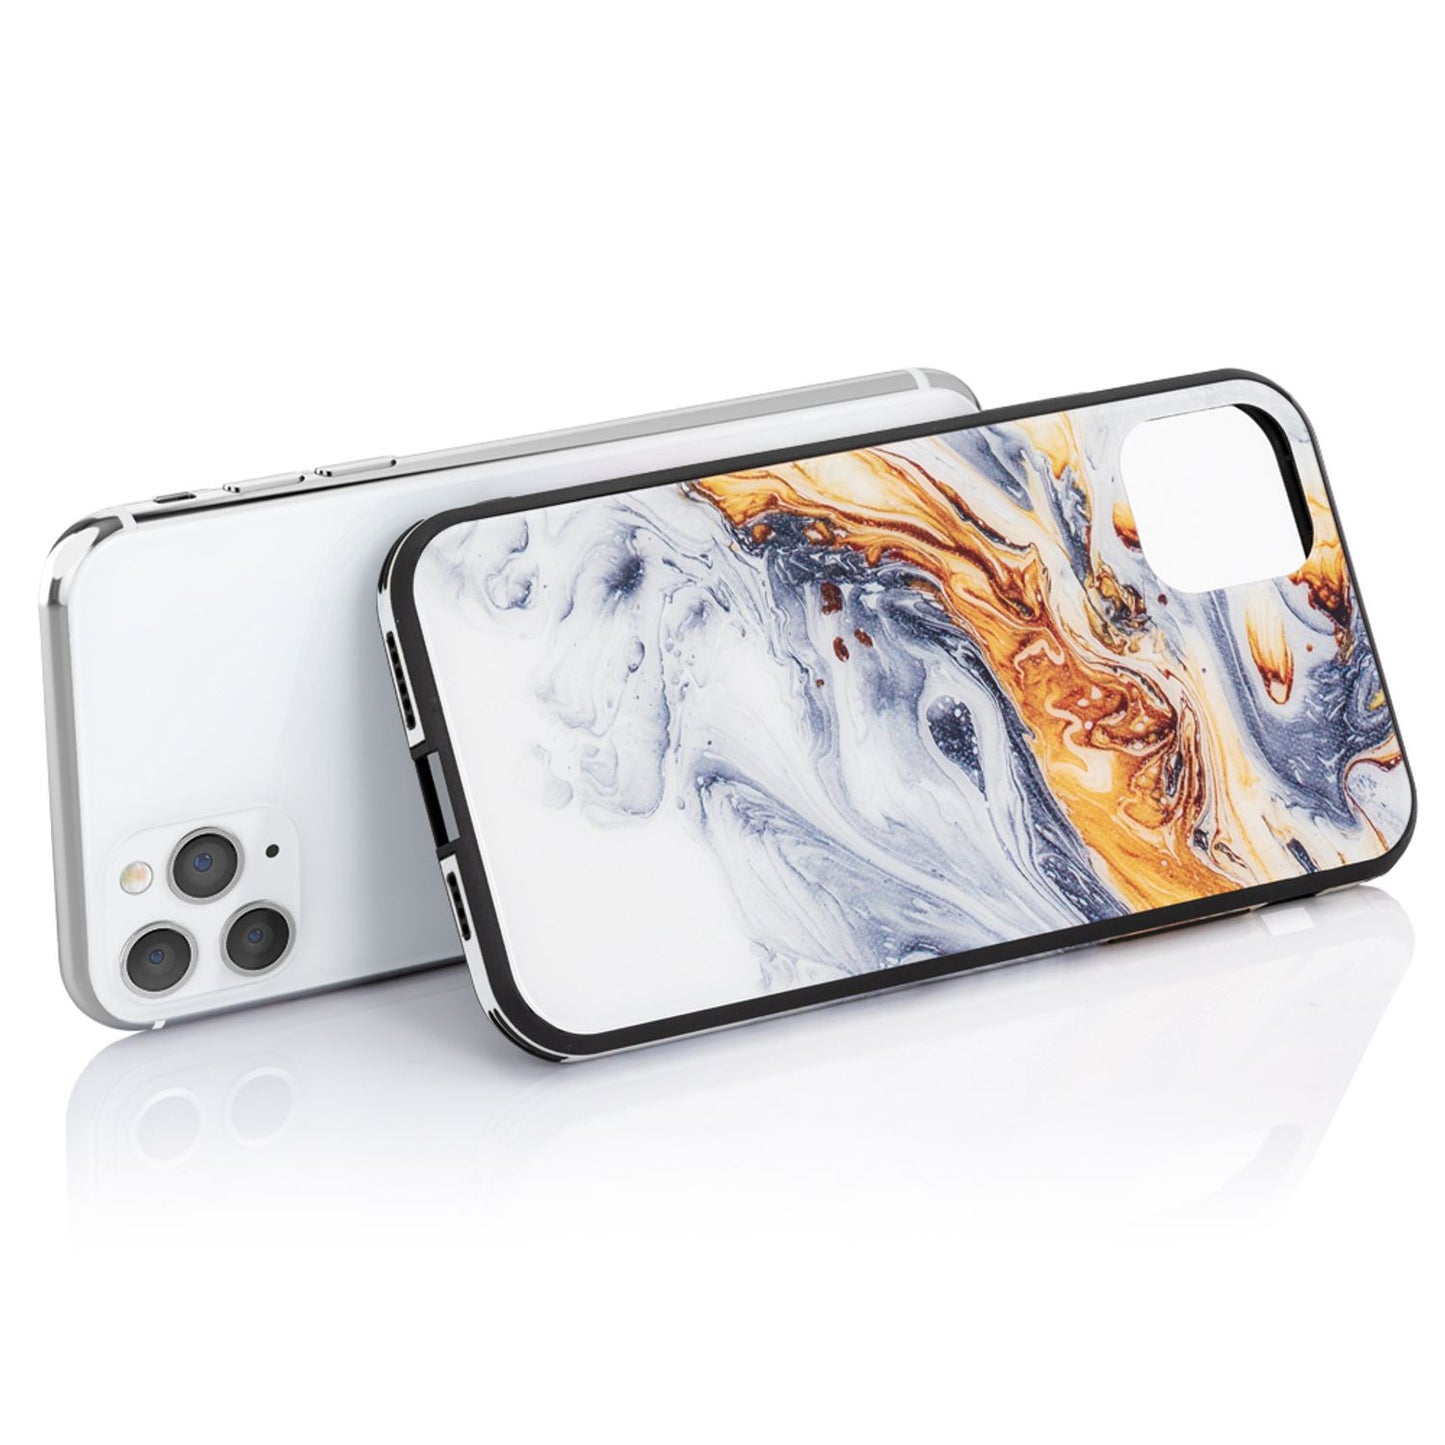 NALIA Hartglas Handy Hülle für iPhone 11 Pro, Marmor Design Tasche Case Cover